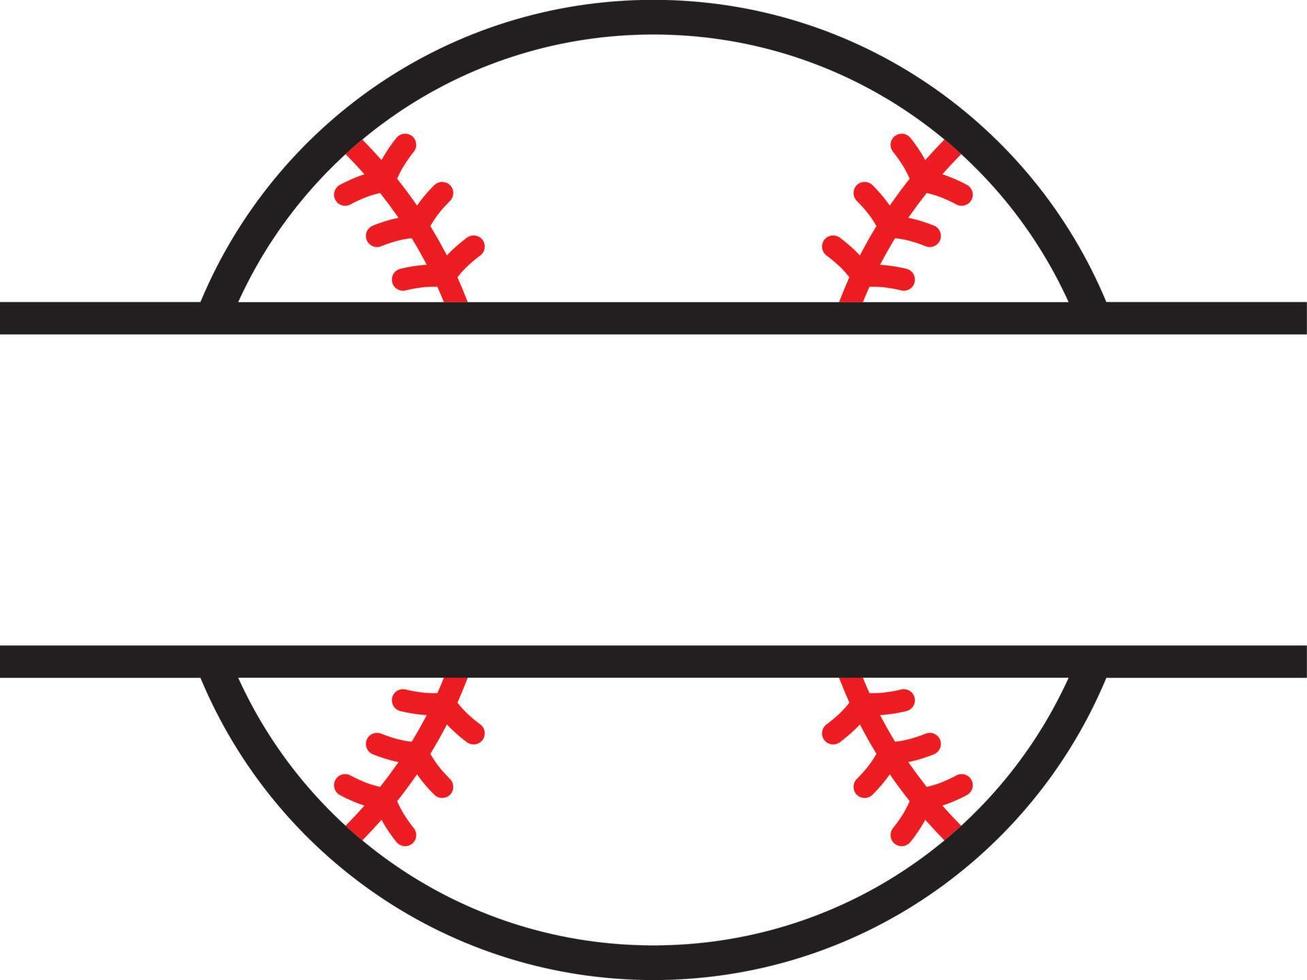 Baseball or softball monogram vector